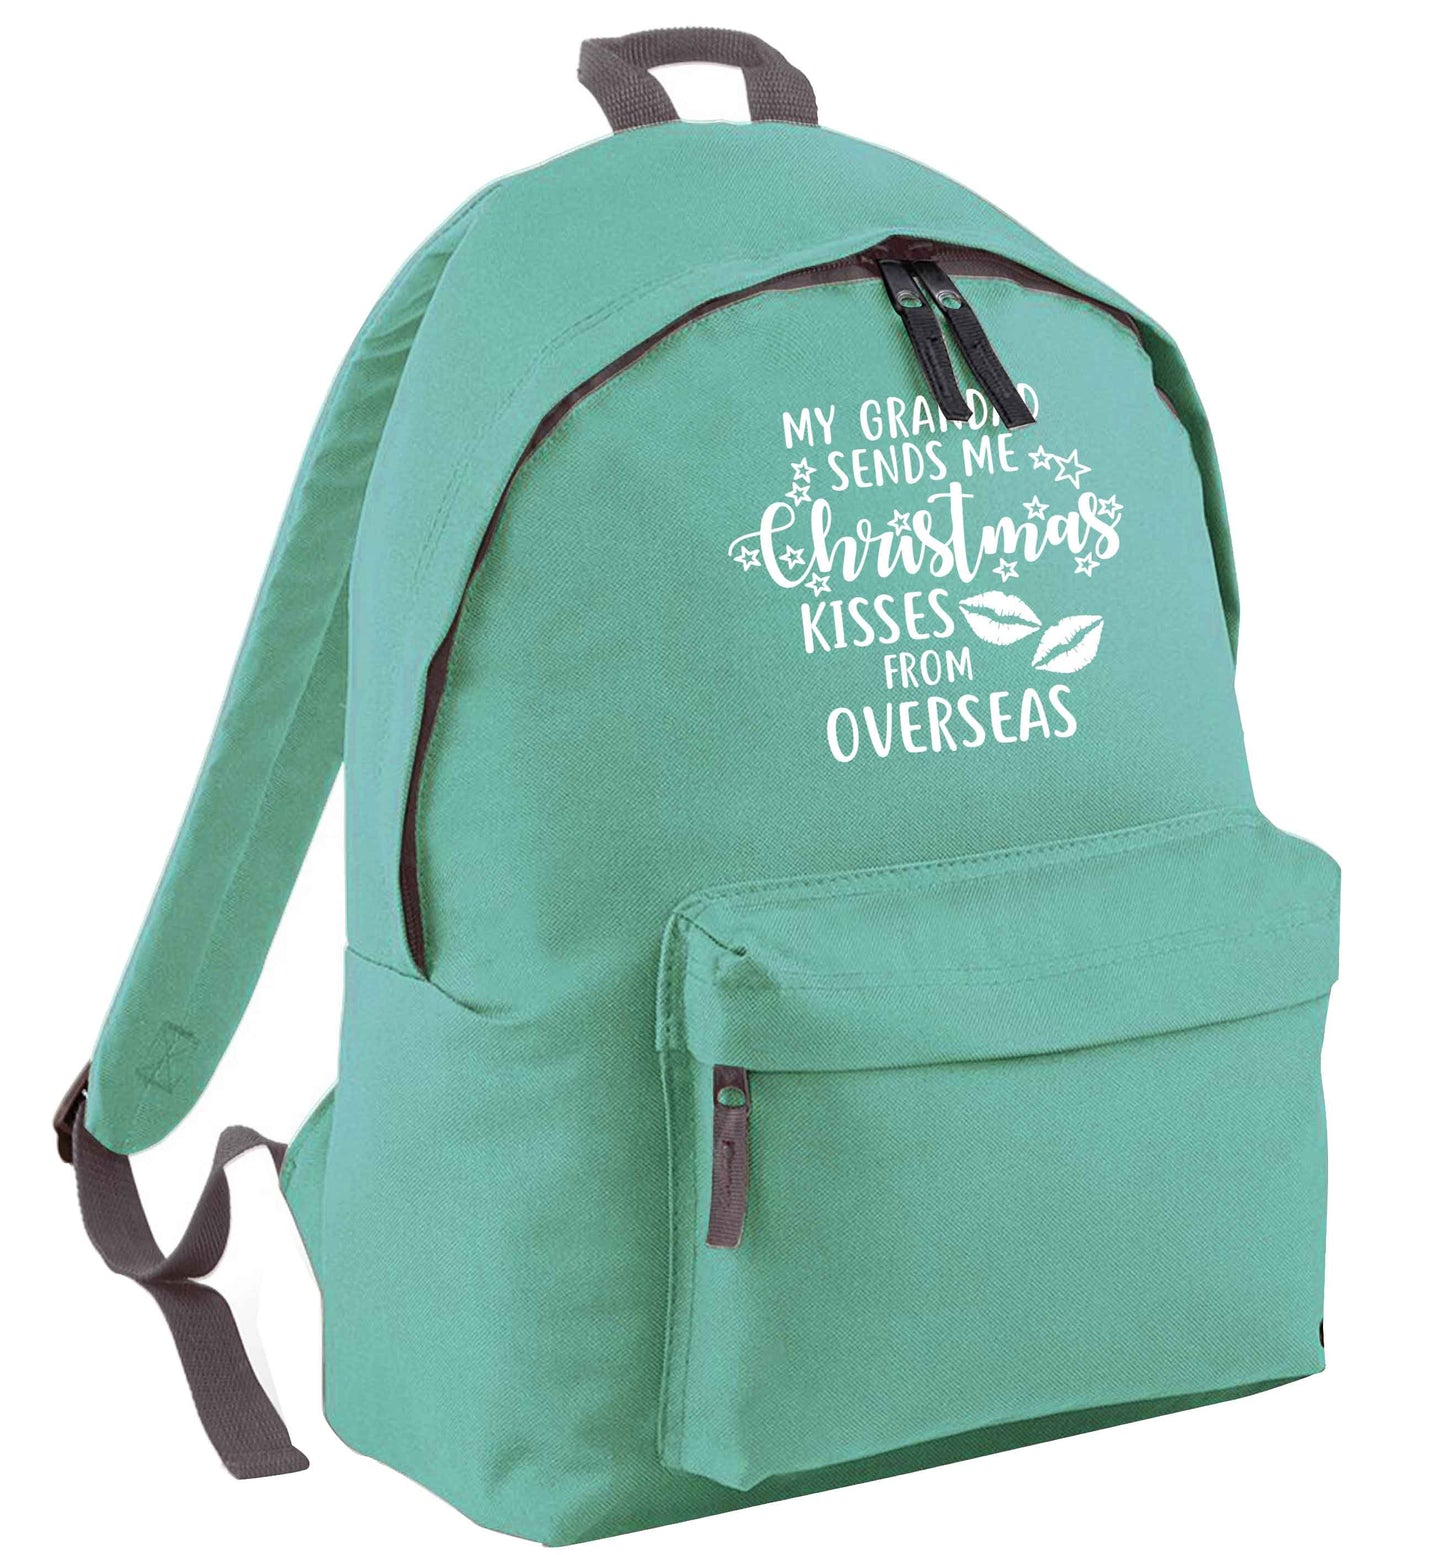 Grandad Christmas Kisses Overseas mint adults backpack